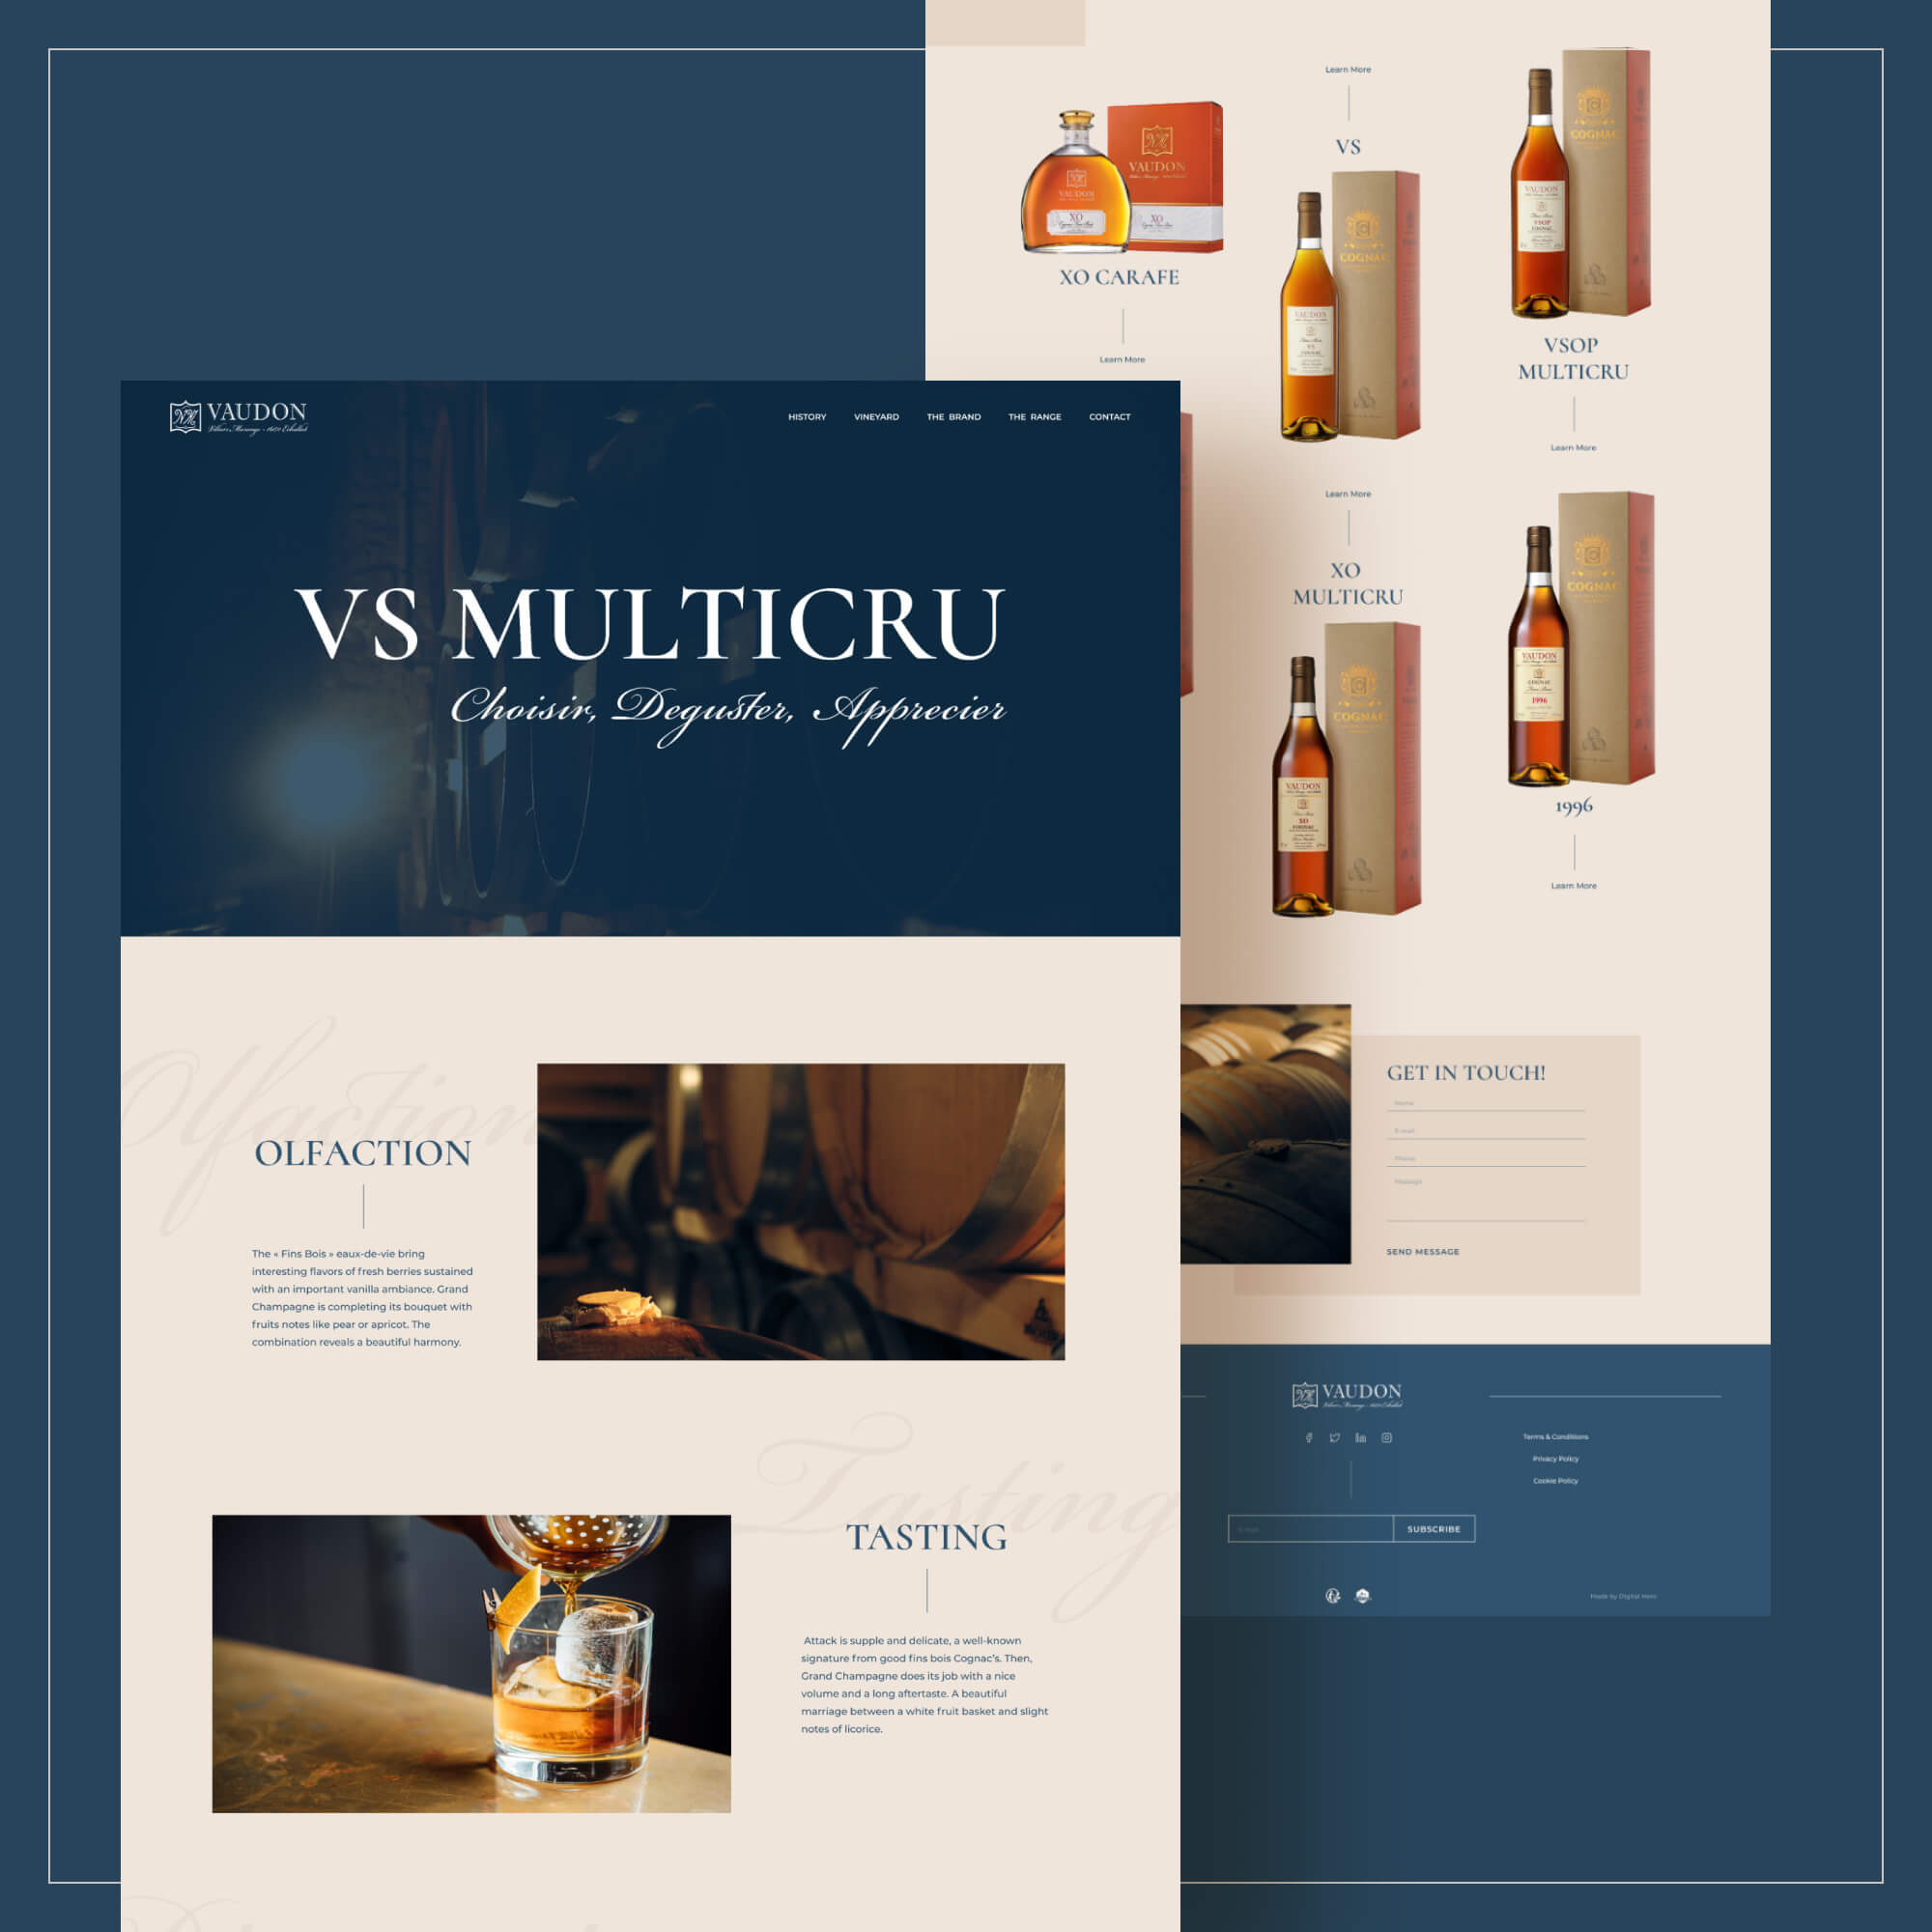 Vaudon Cognac website design